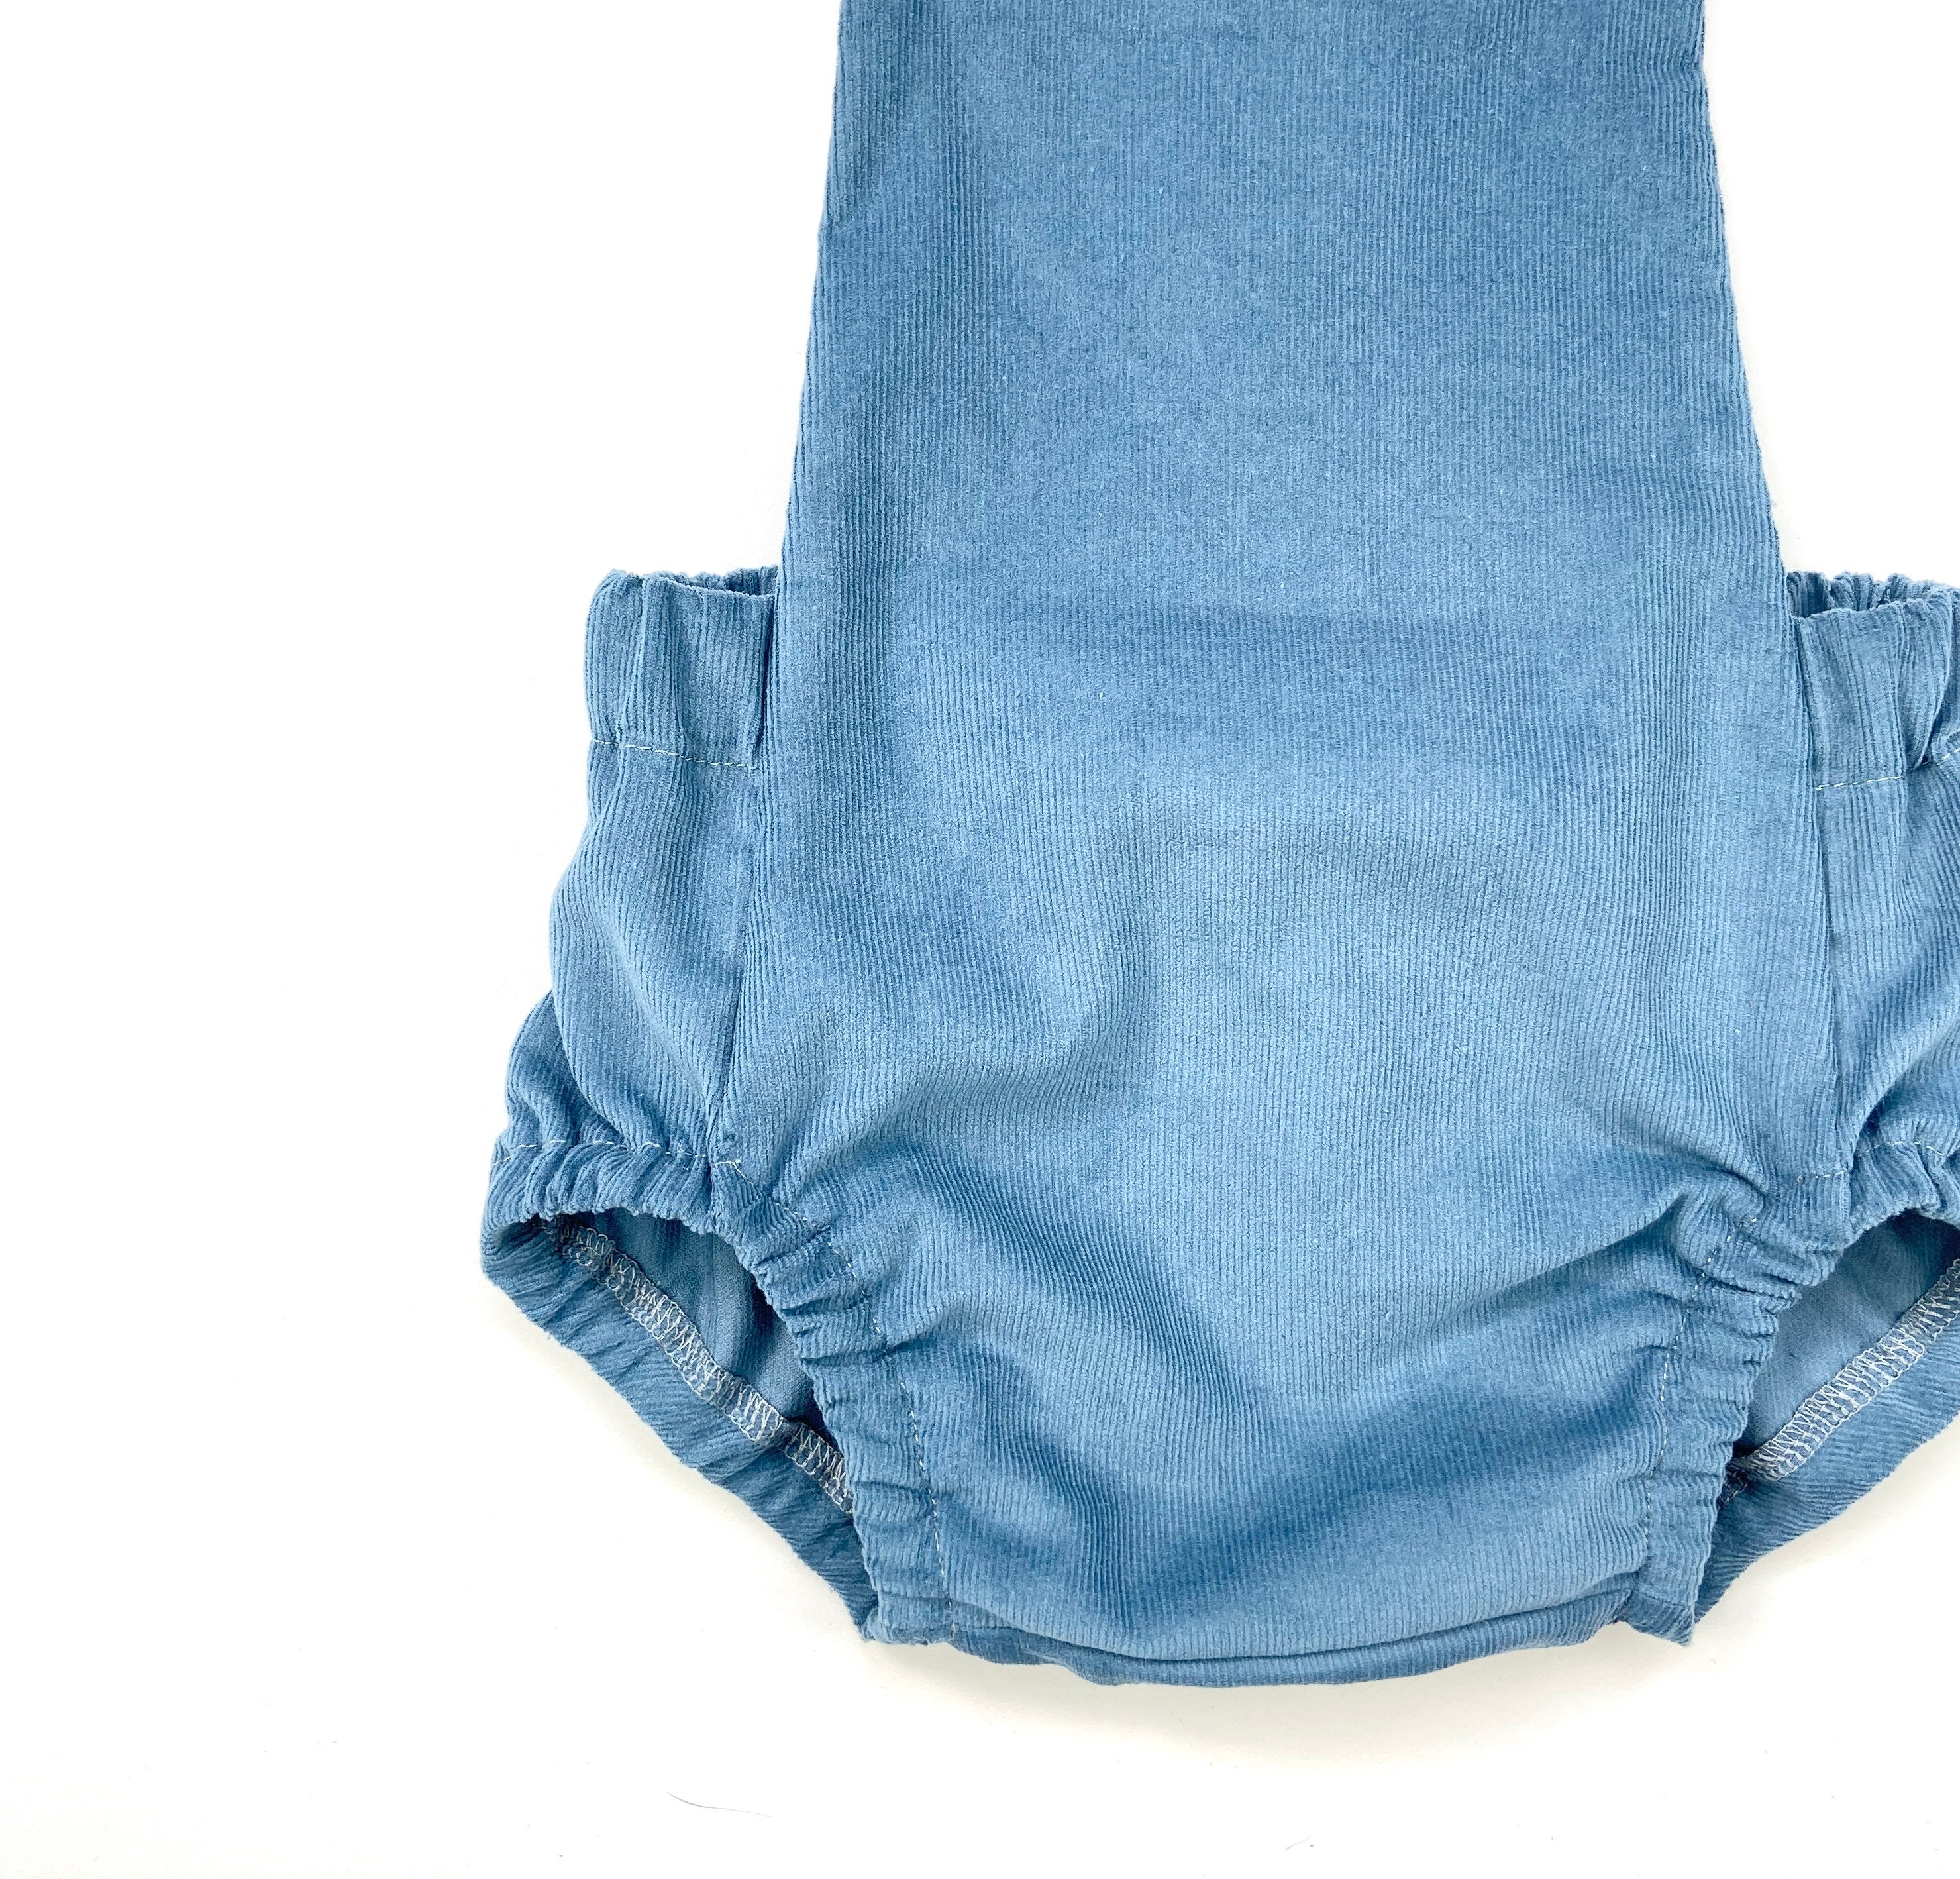 Kleding Unisex kinderkleding Unisex babykleding Broekjes Luierbroekjes & Ondergoed Babyverzorging emmers 